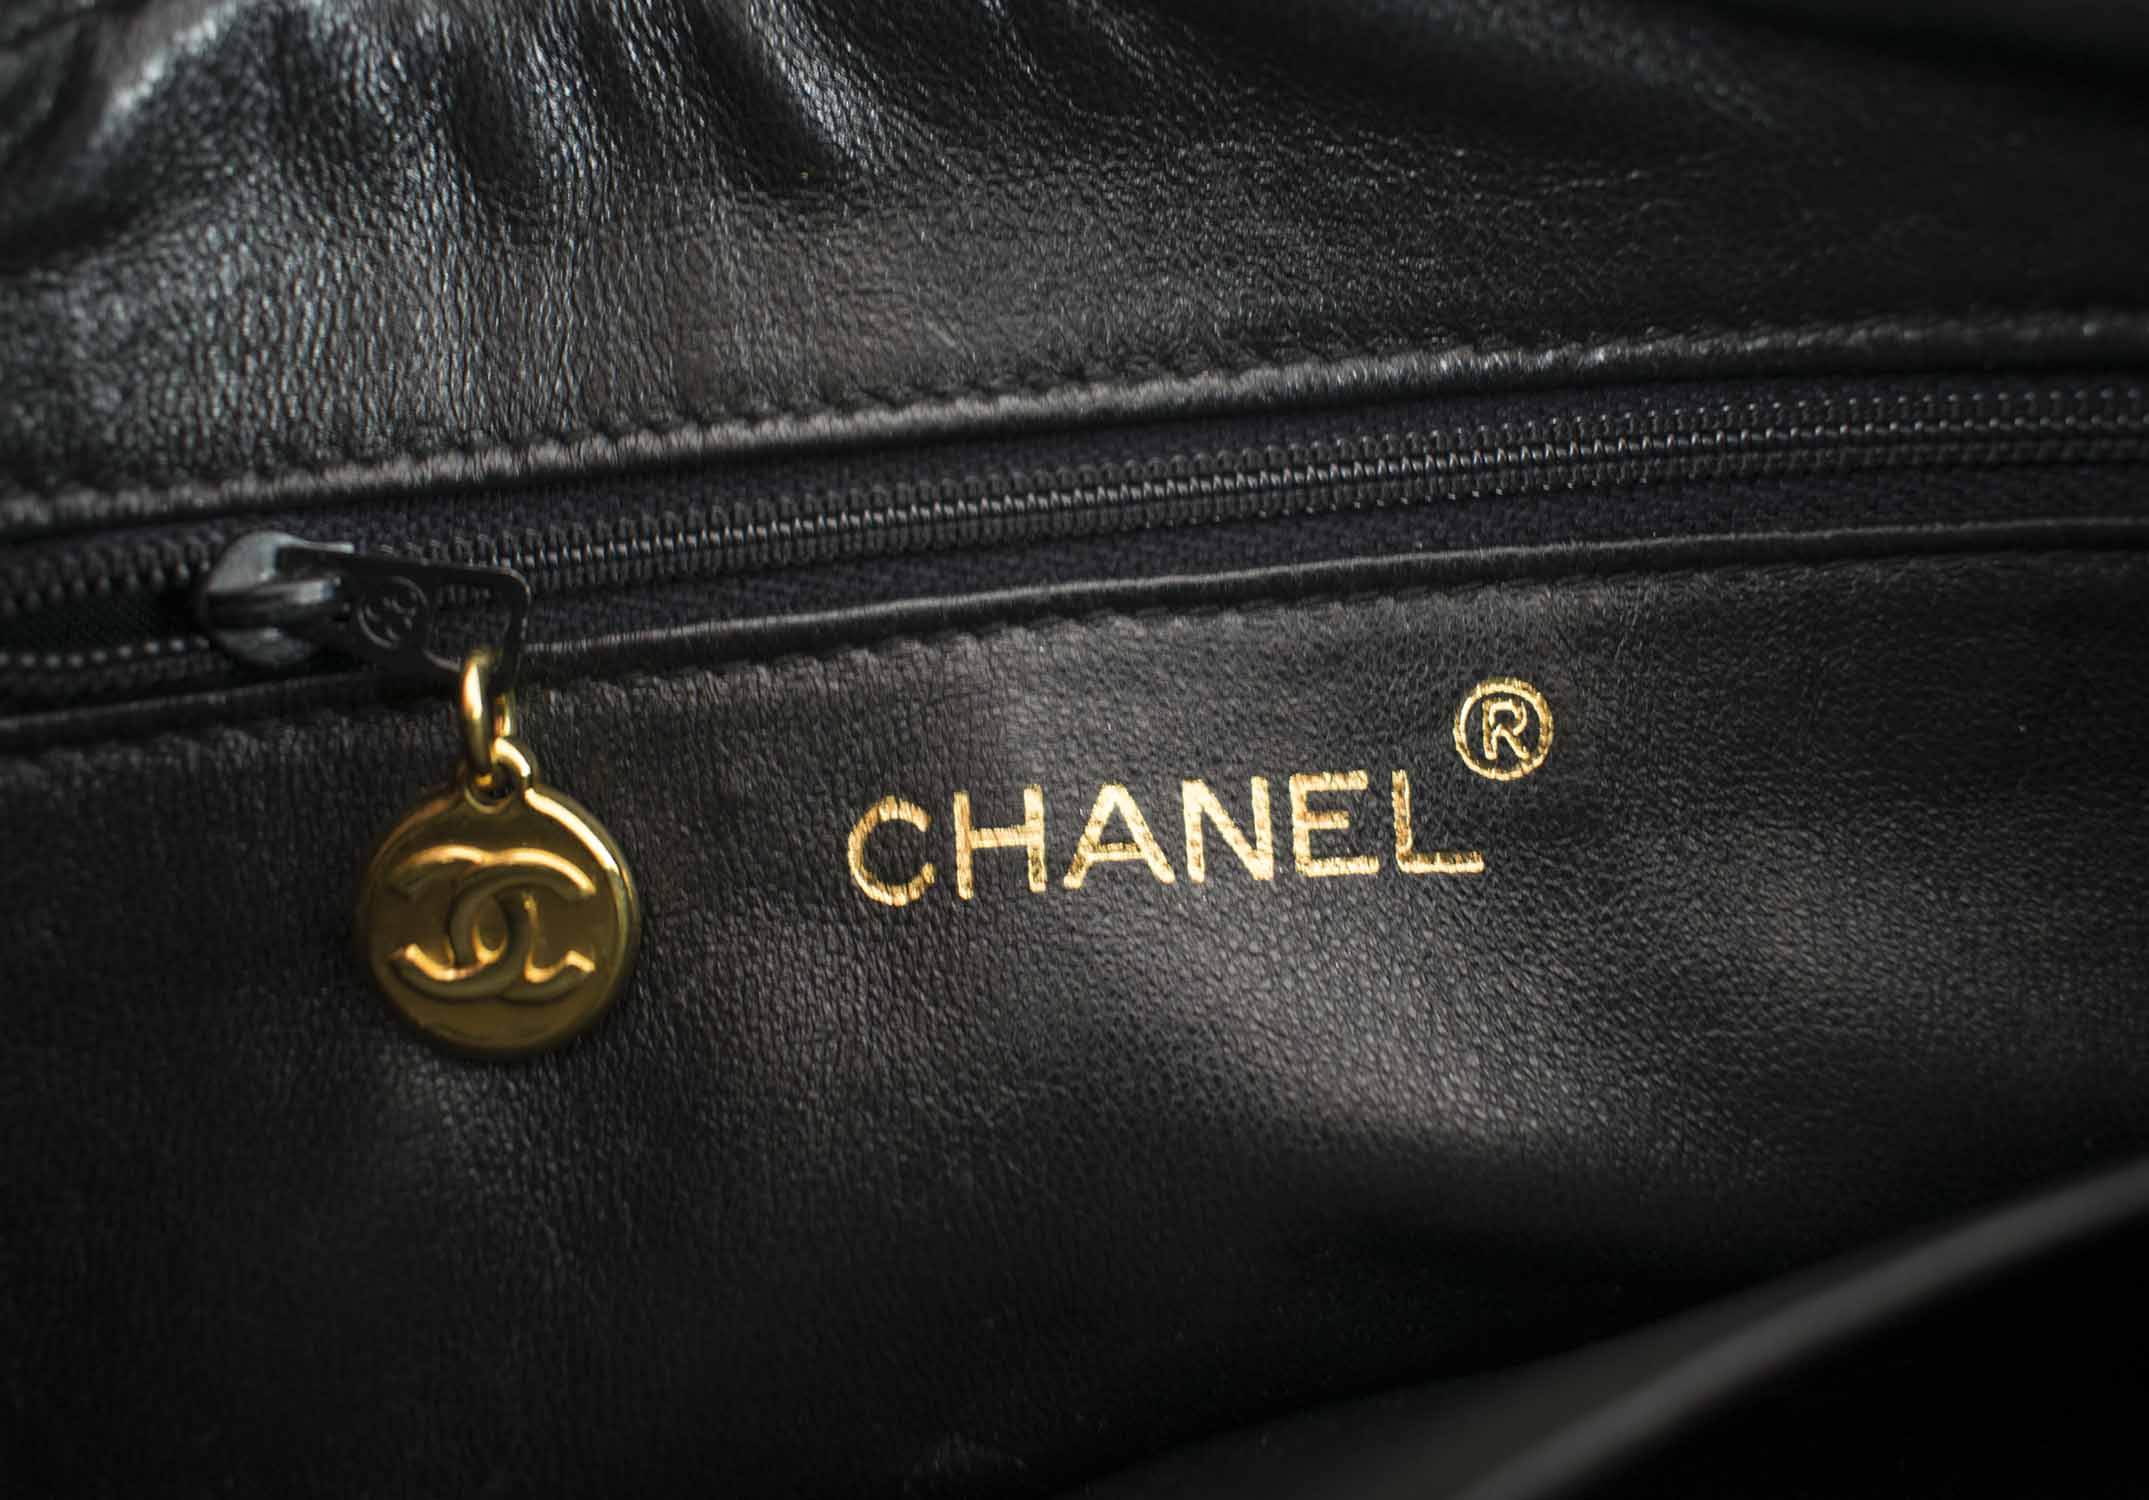 Chanel Vintage 1991 Black Nylon CC Logo Tote Bag with Gold Chain